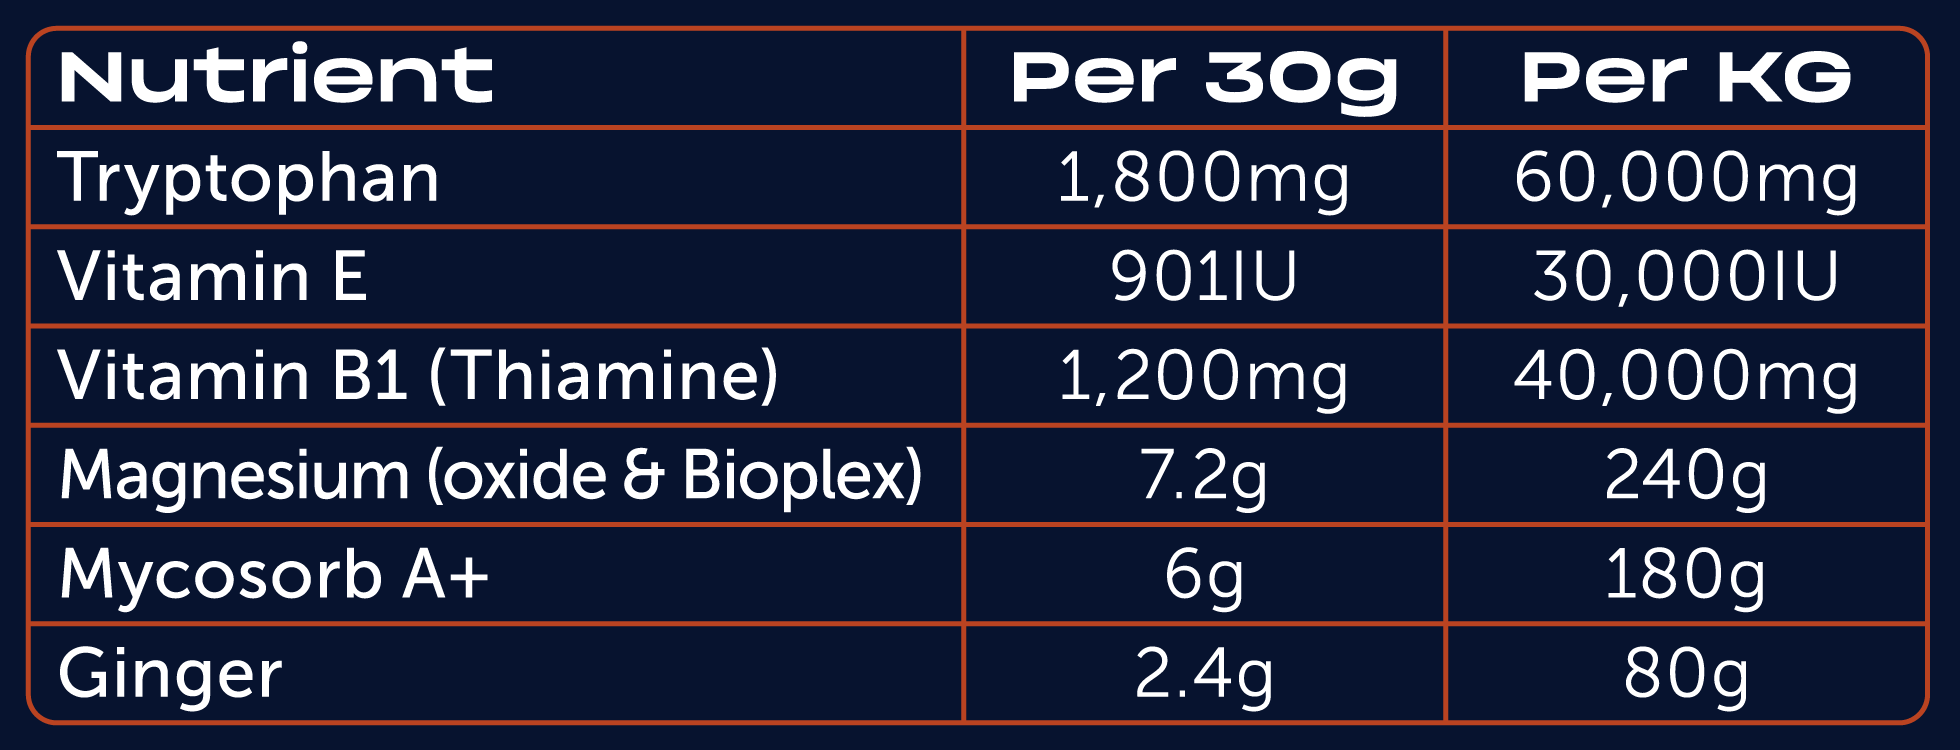 Settla-T Nutrient Table